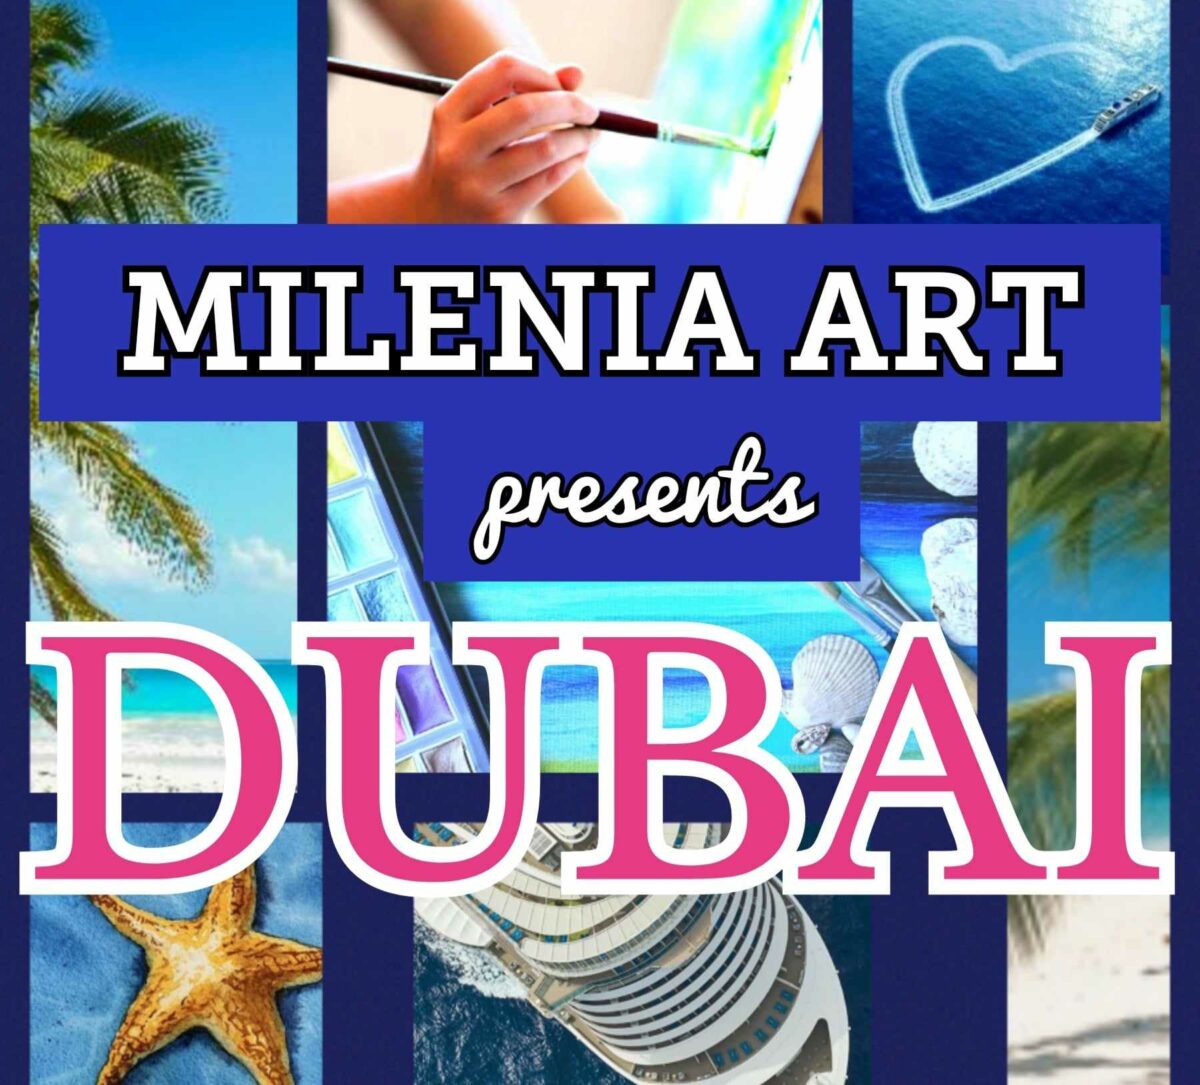 Milenia Art Presents Dubai